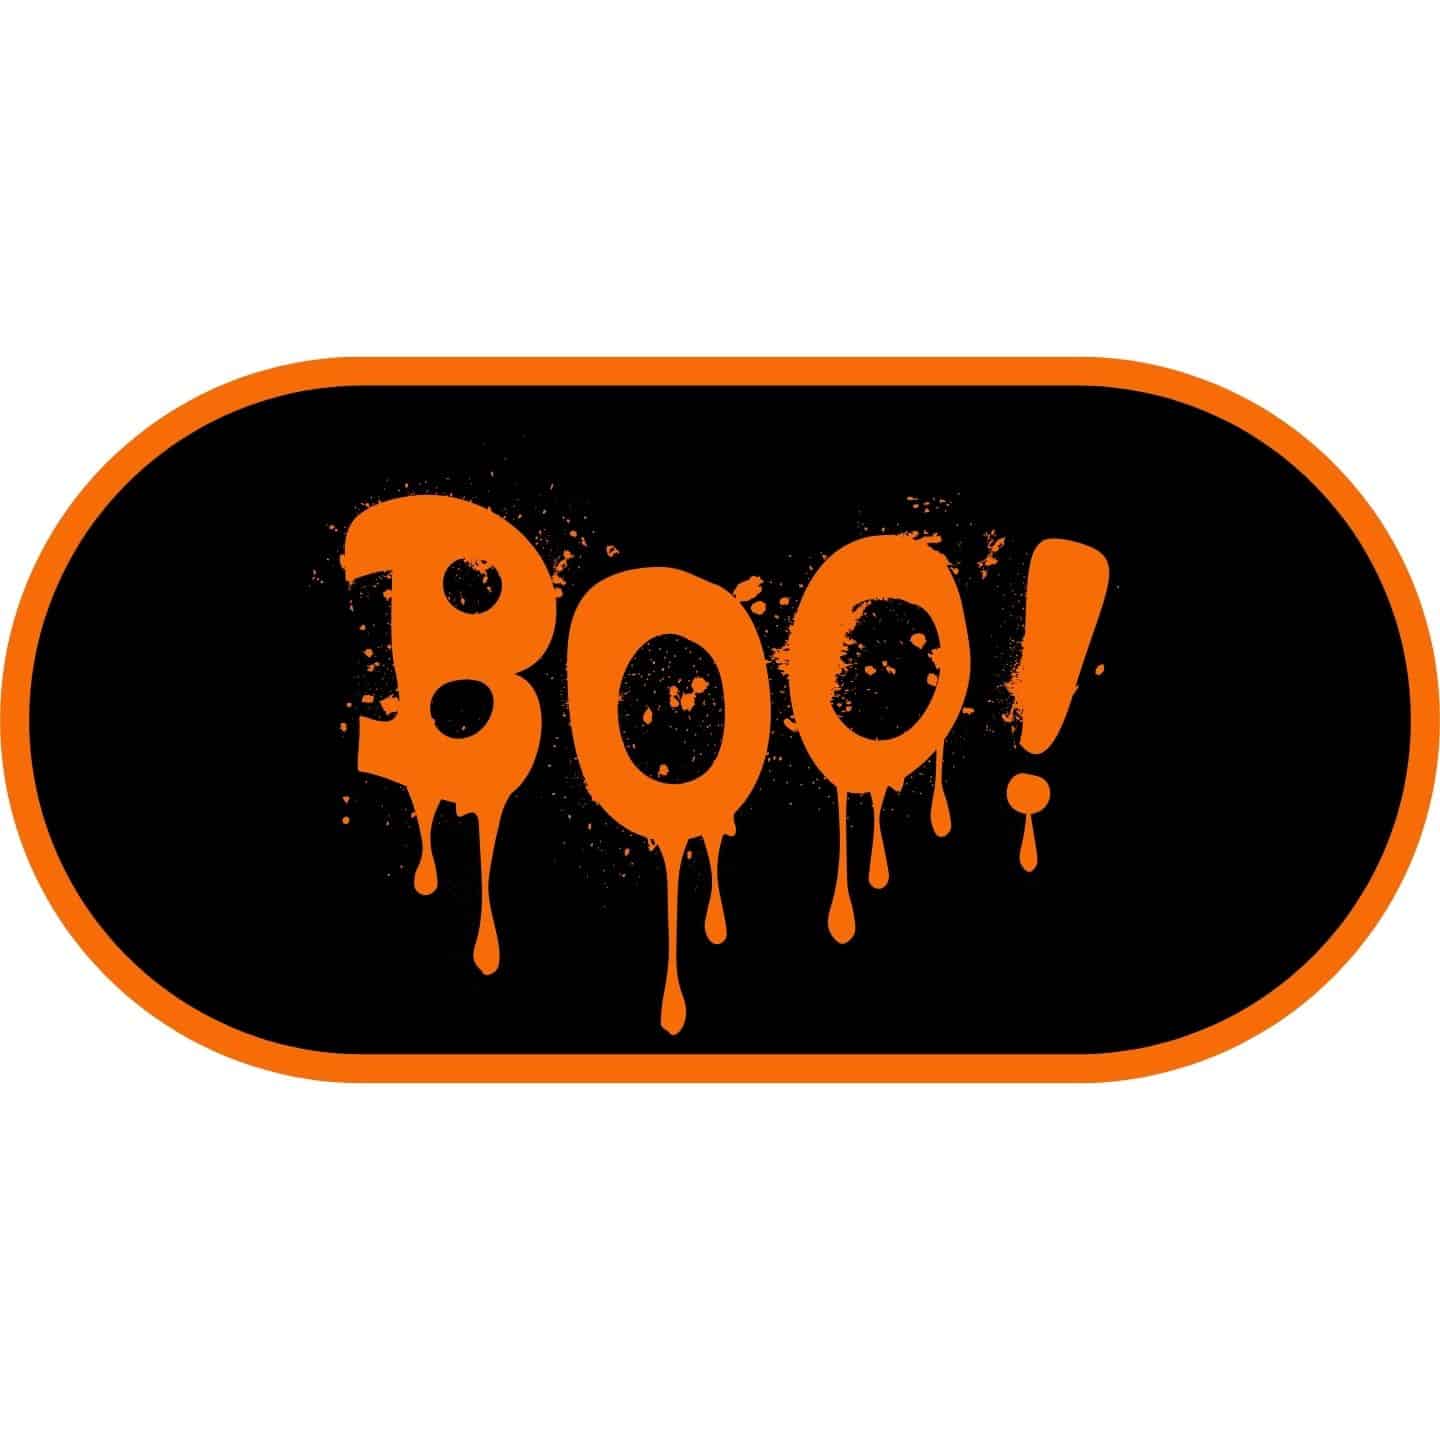 Boo!